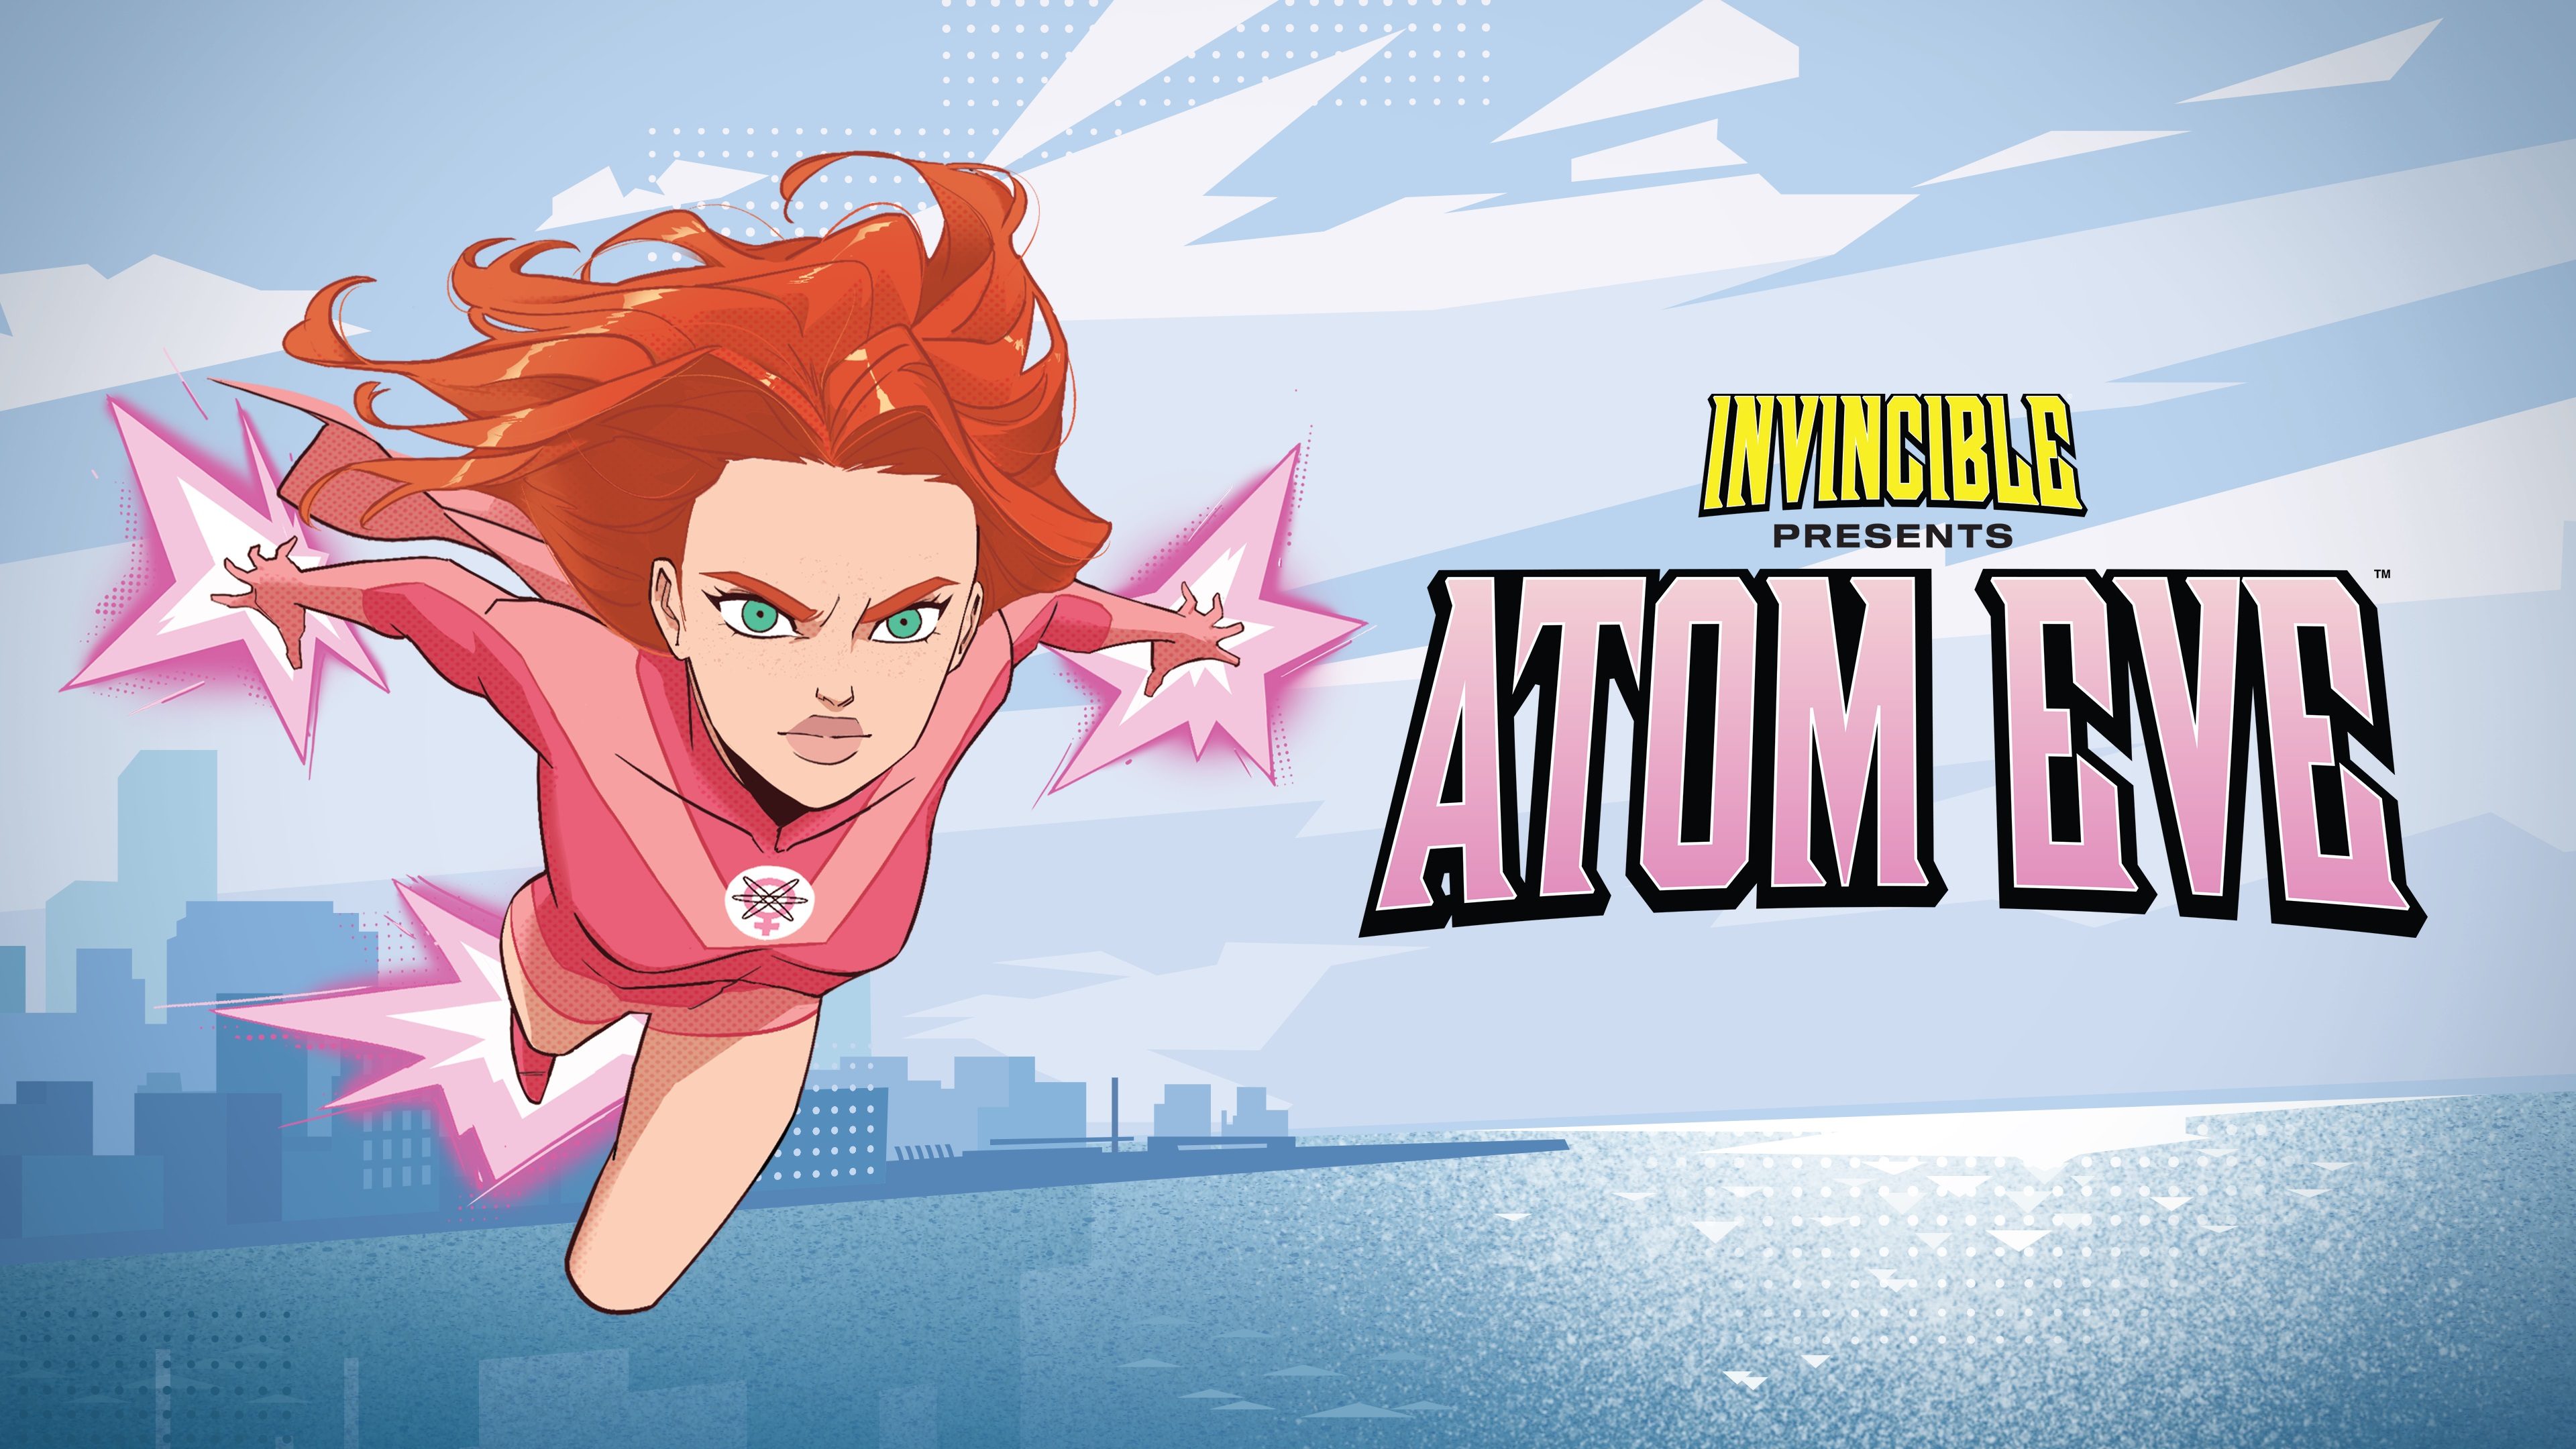 Invincible Presents Atom Eve, A Visual Novel RPG Announced mxdwn Games